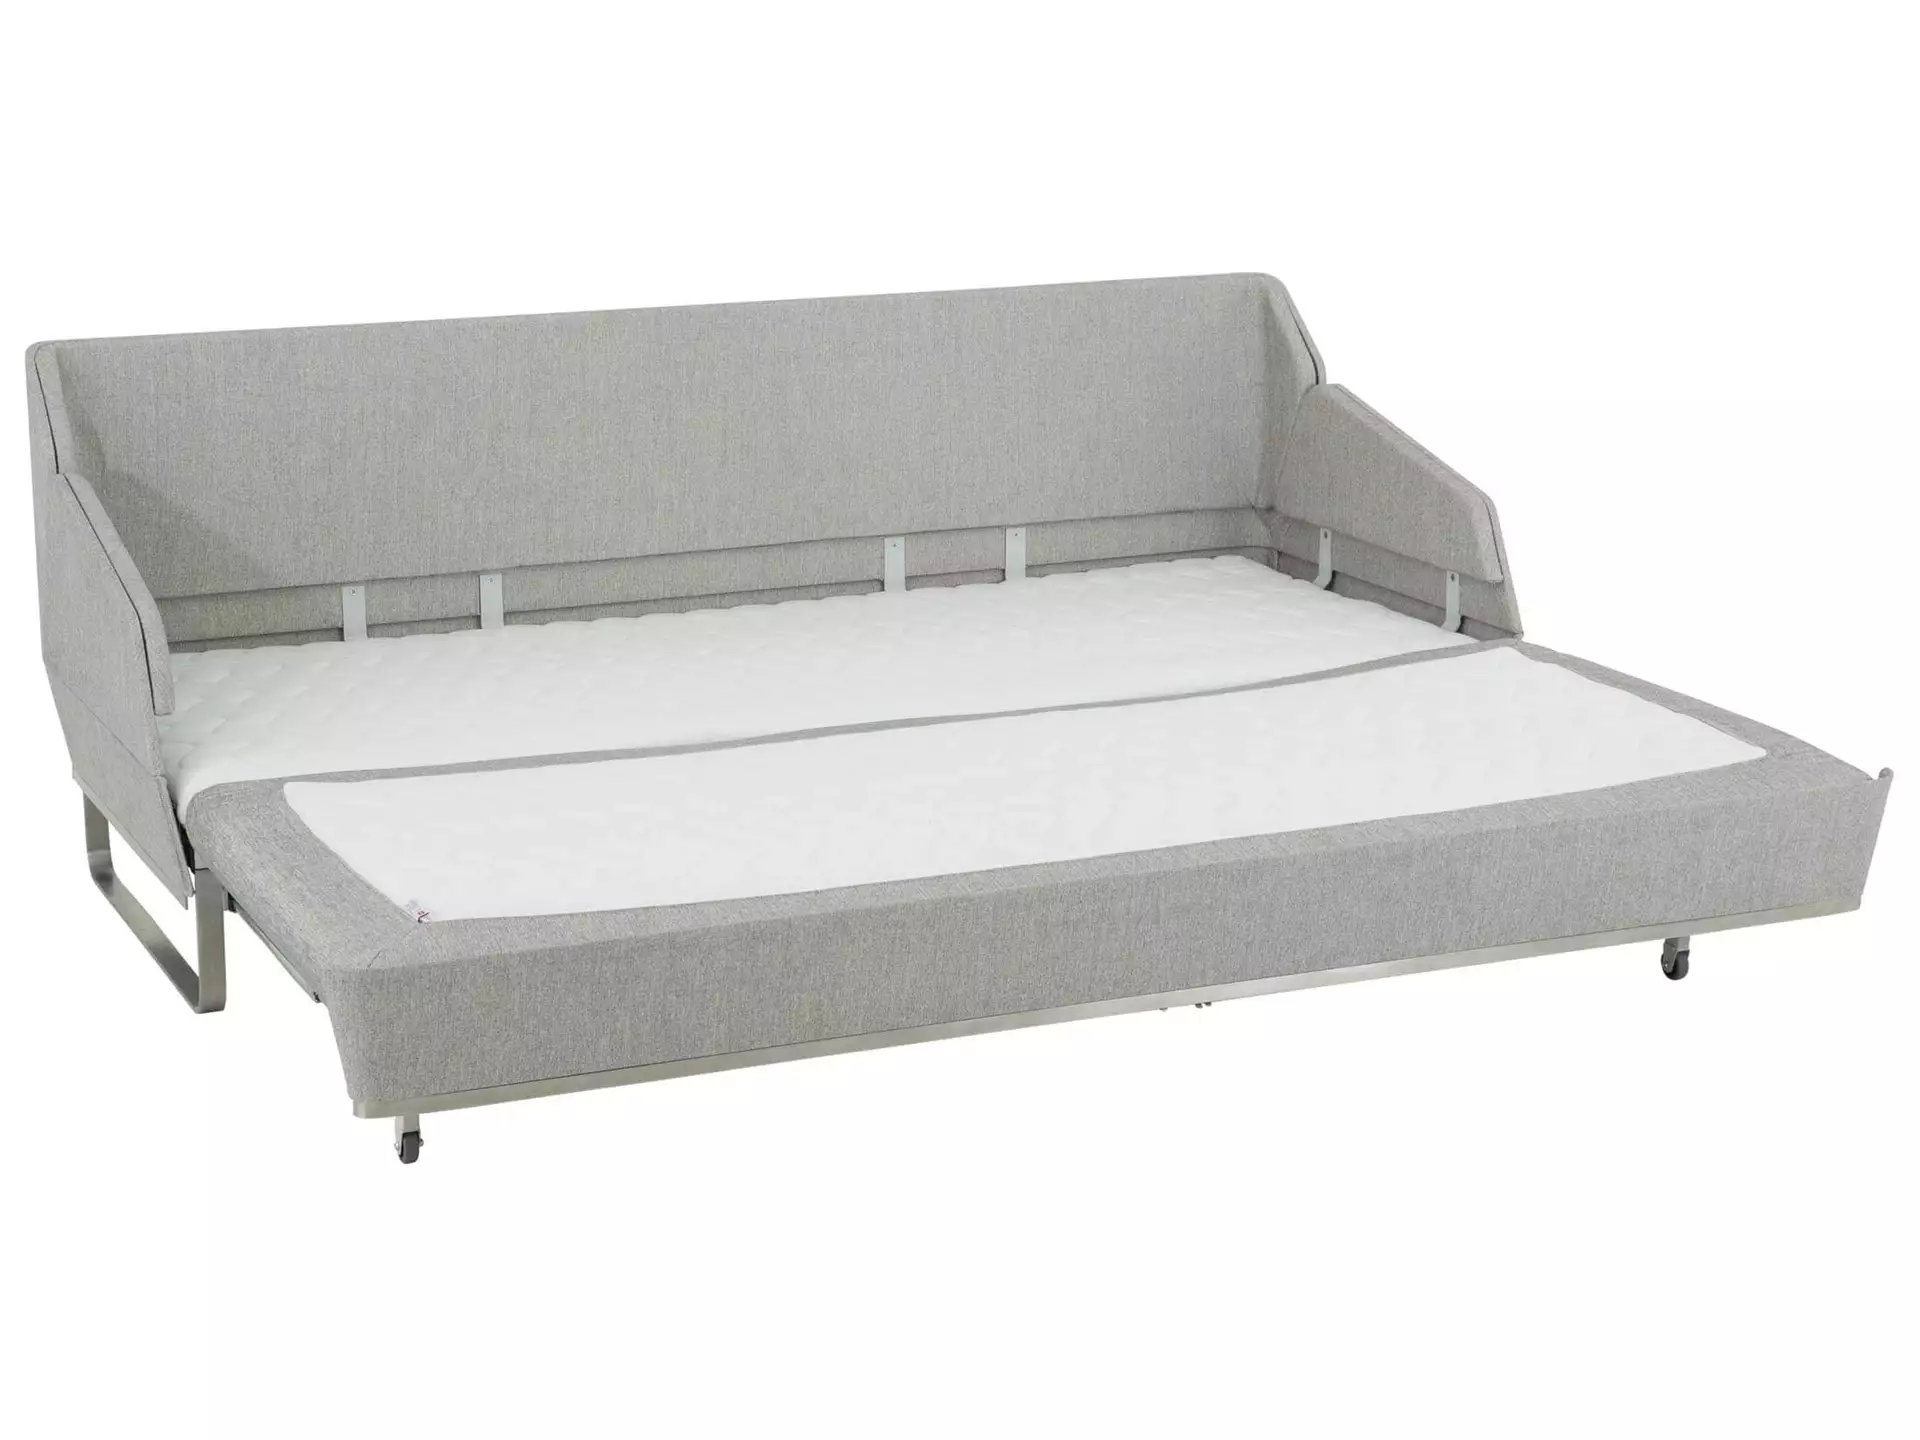 Bettsofa Bed For Living, Stoff Silber, Deluxe, b 205 cm